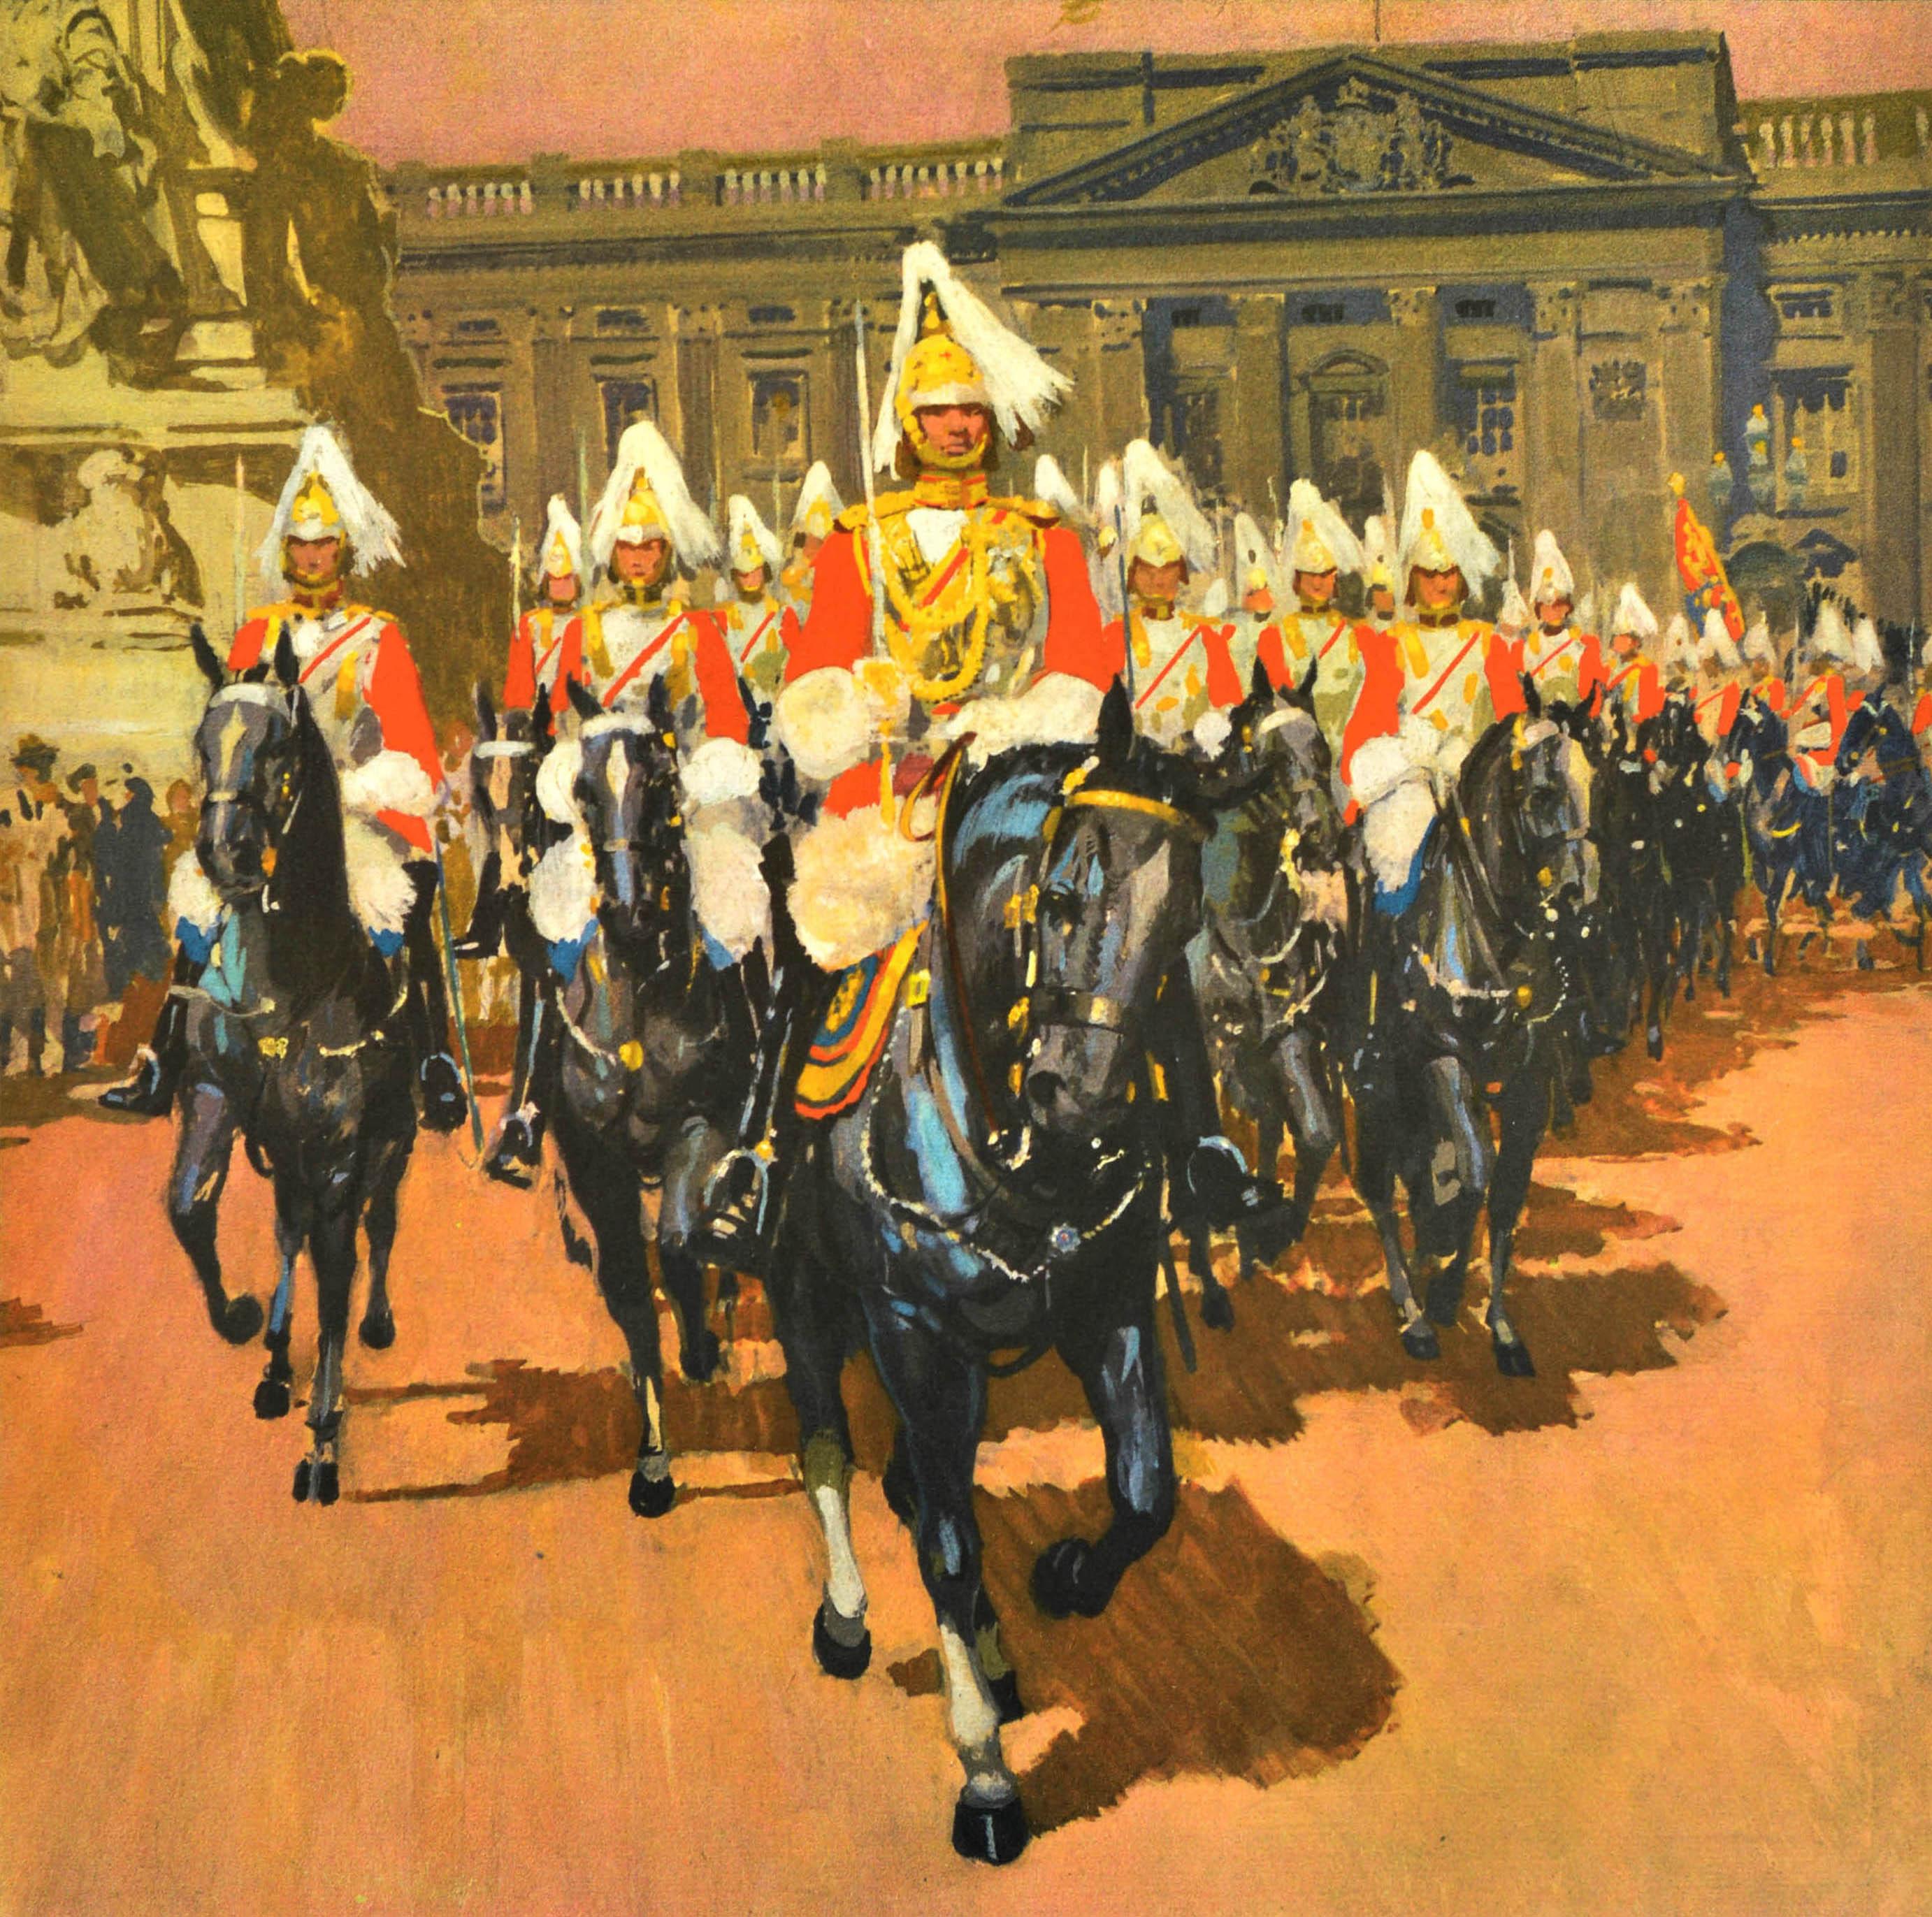 Original Vintage Travel Poster See Britain By Train Buckingham Palace Cavalry - Print by Gordon Nicoll